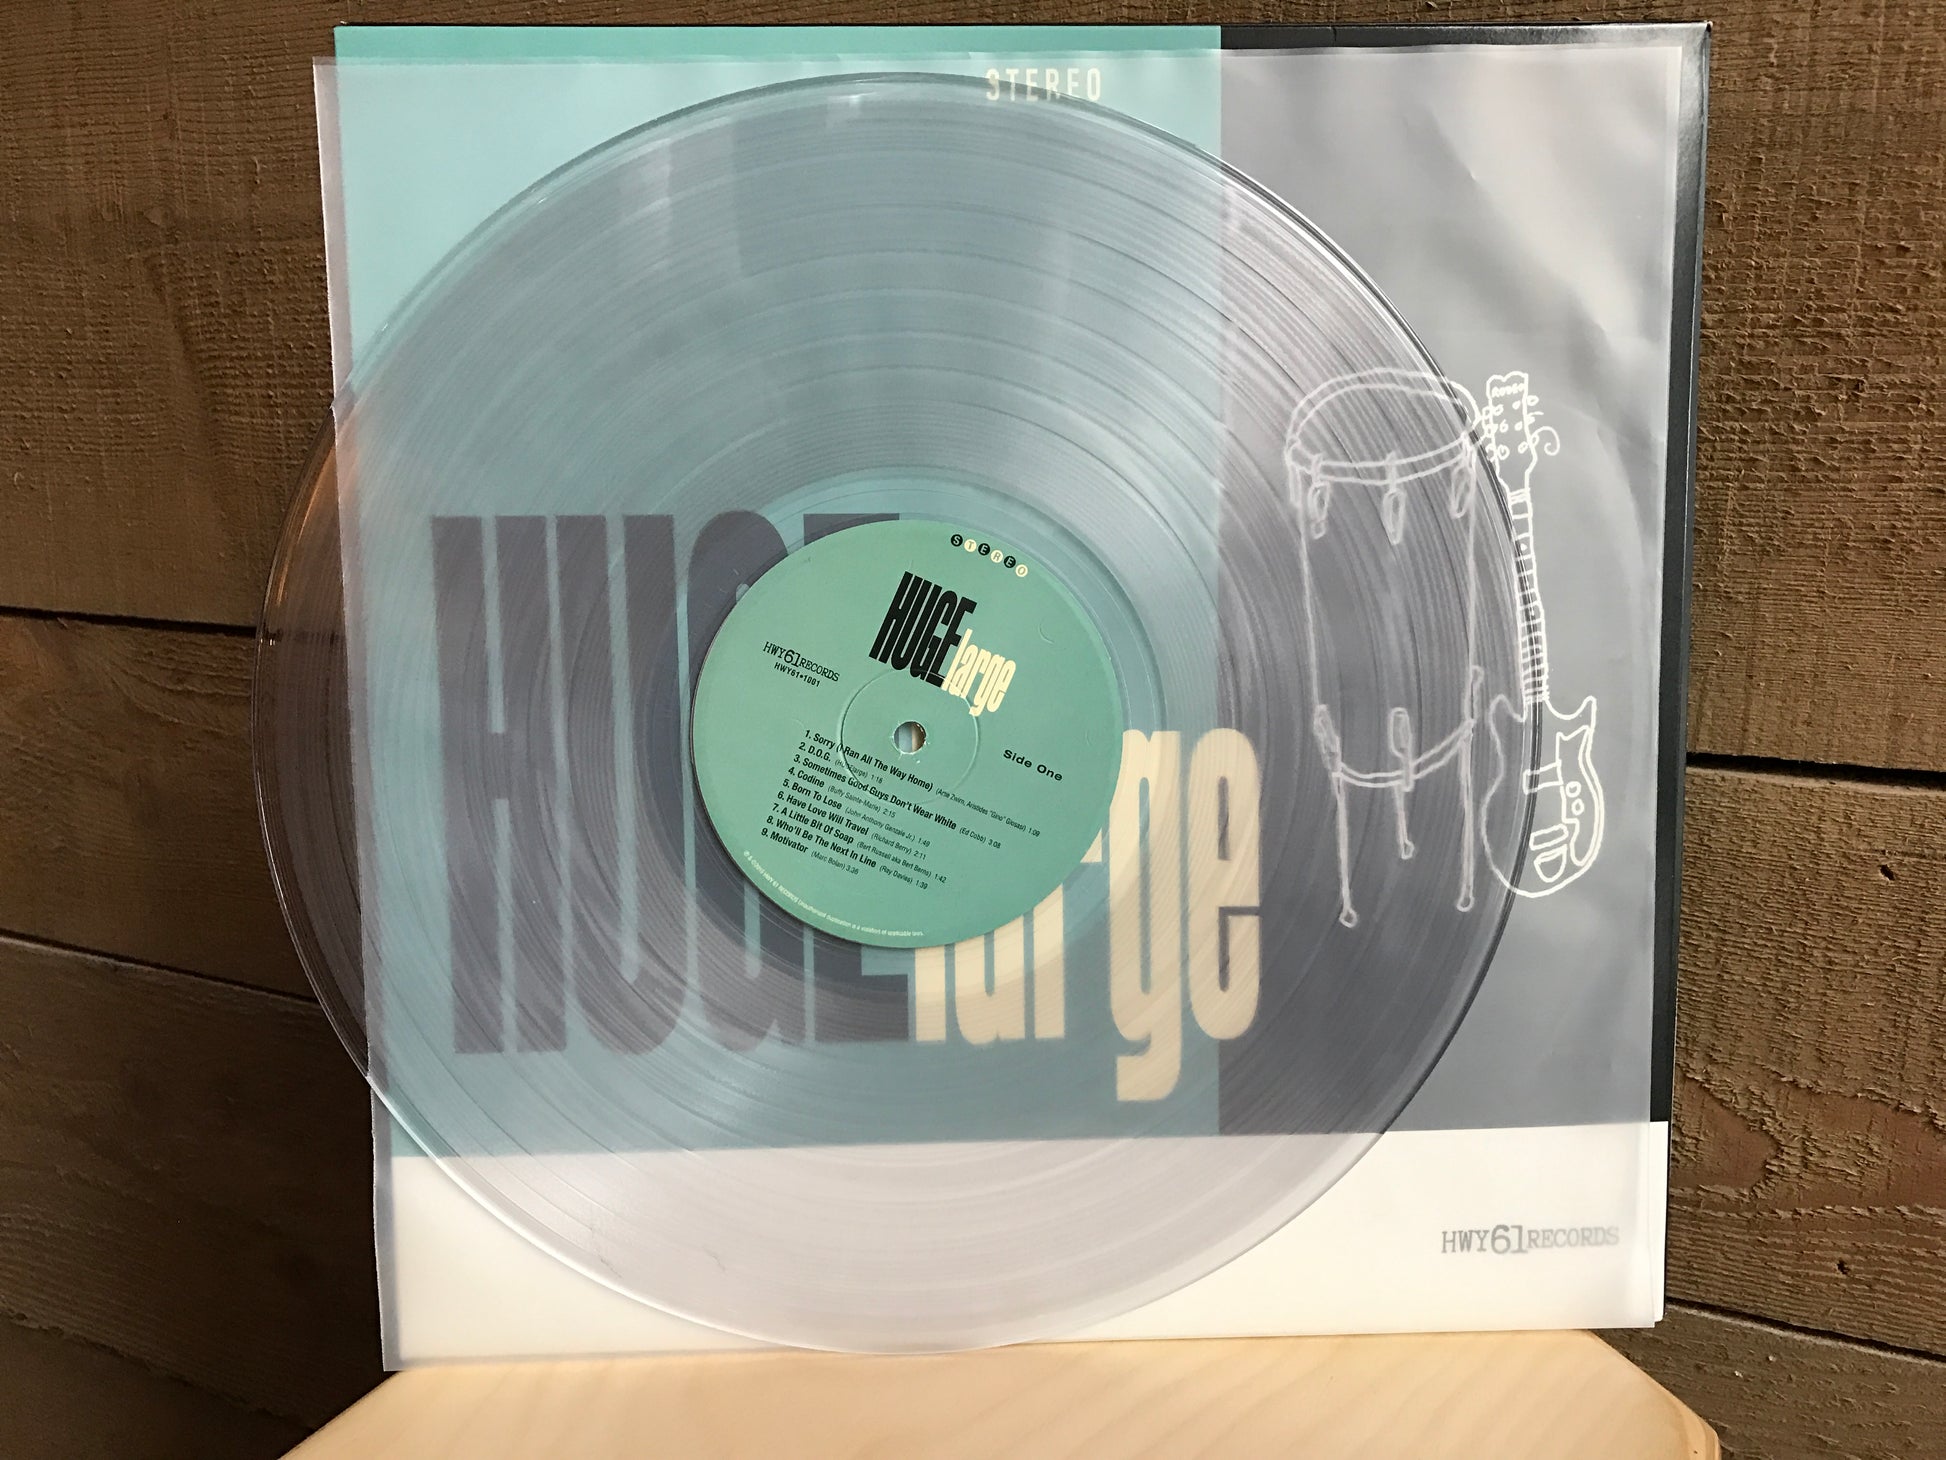 hugelarge album clear vinyl 2015 blue rose music